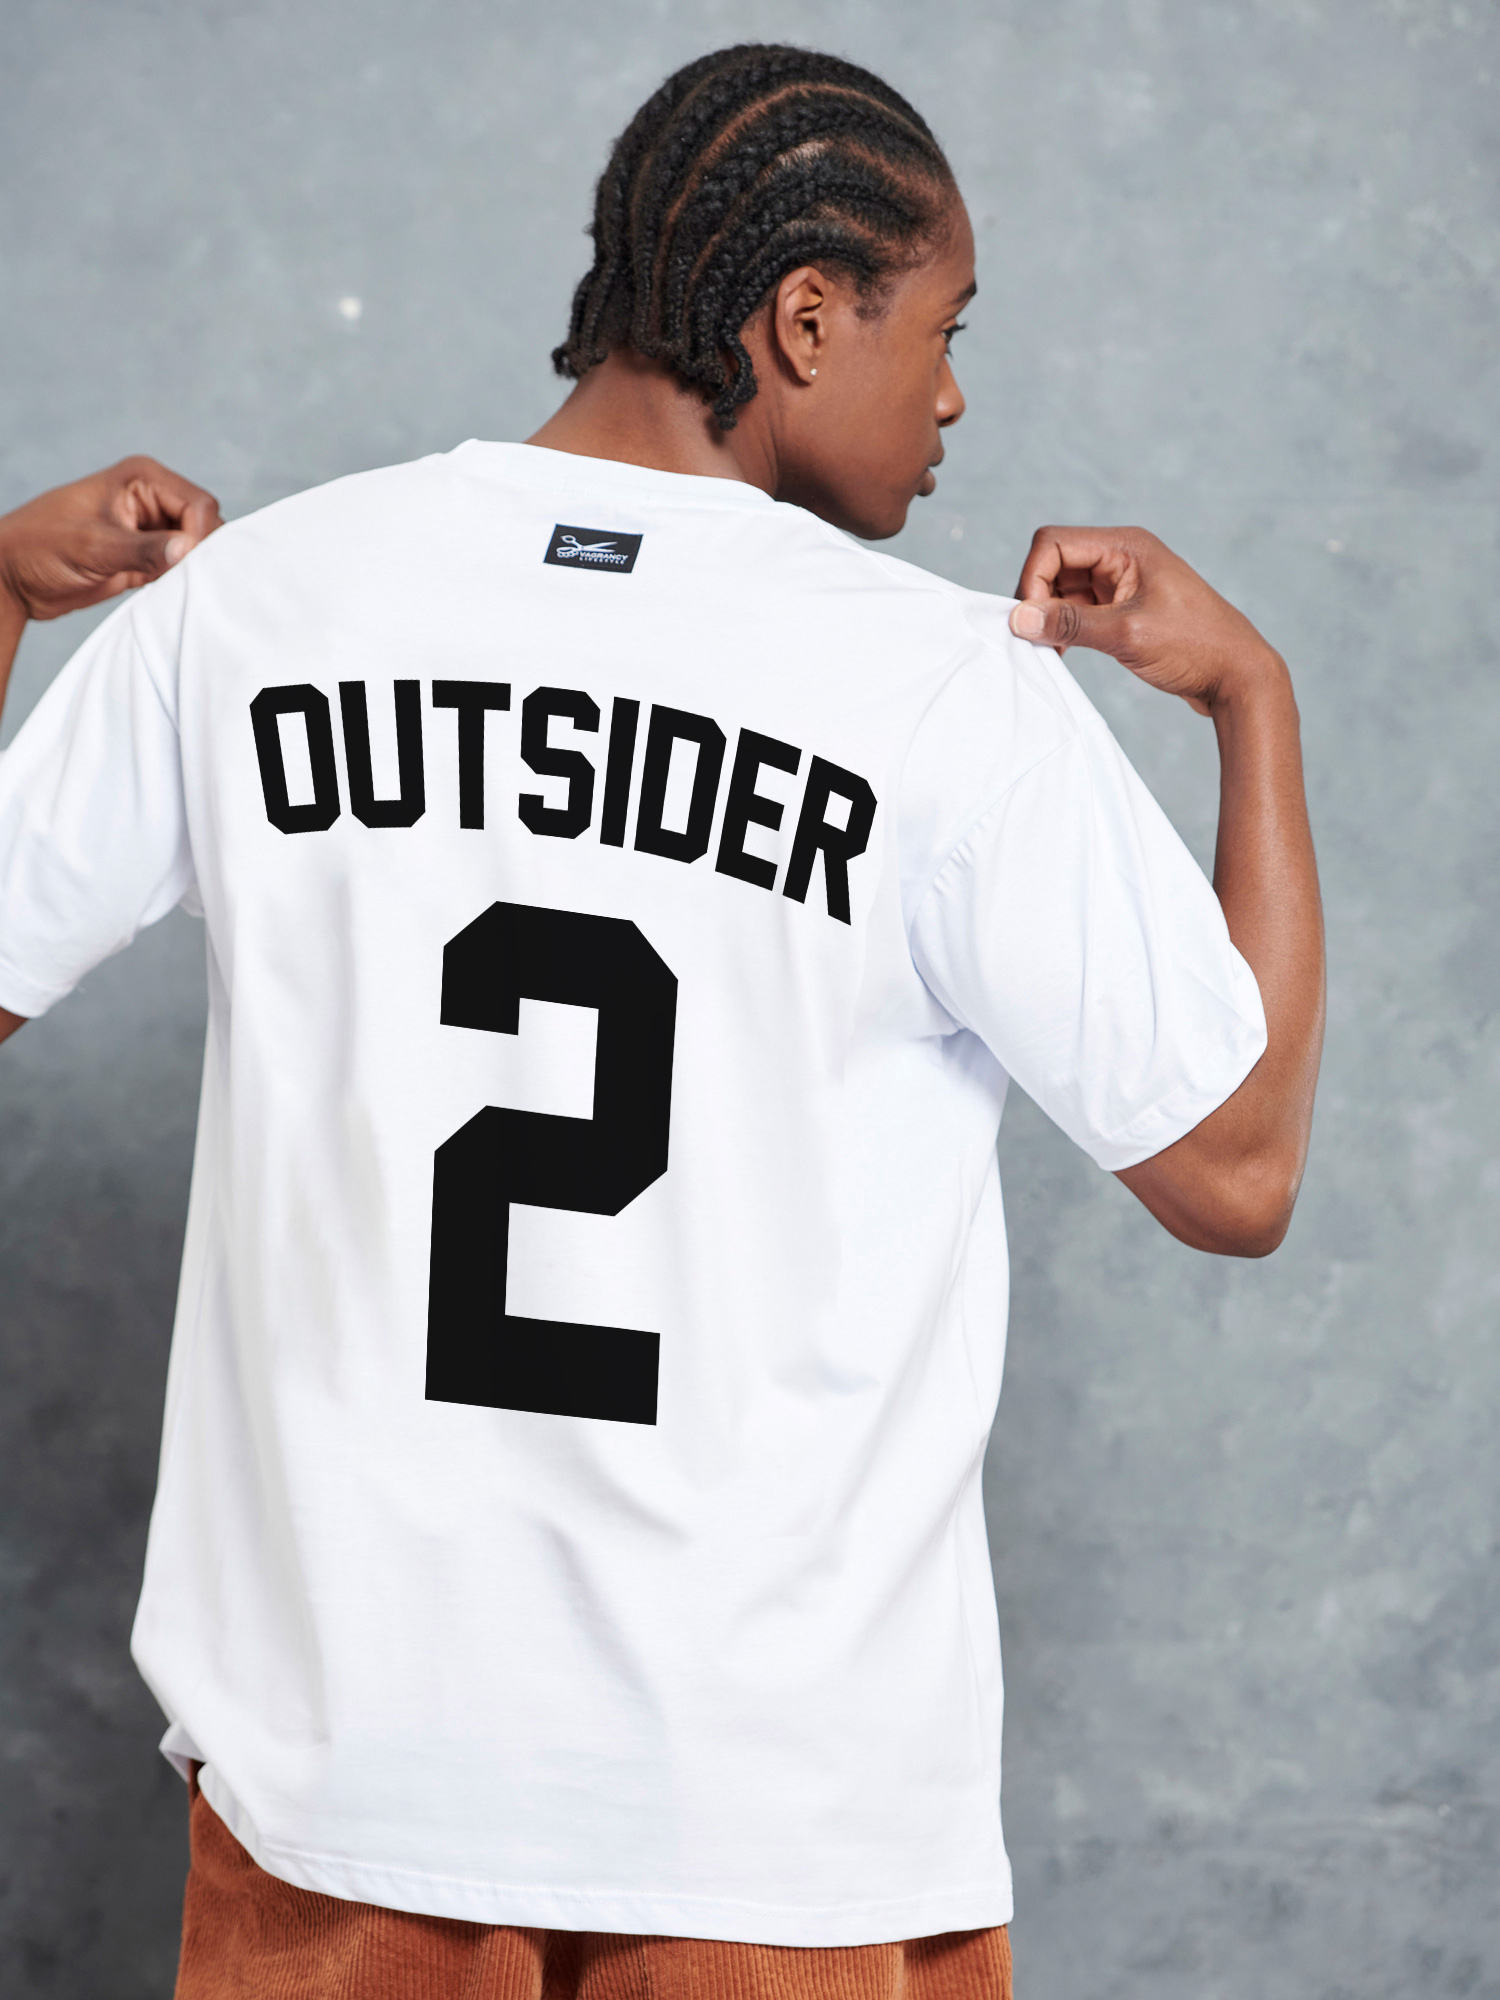 Outsider t-shirt